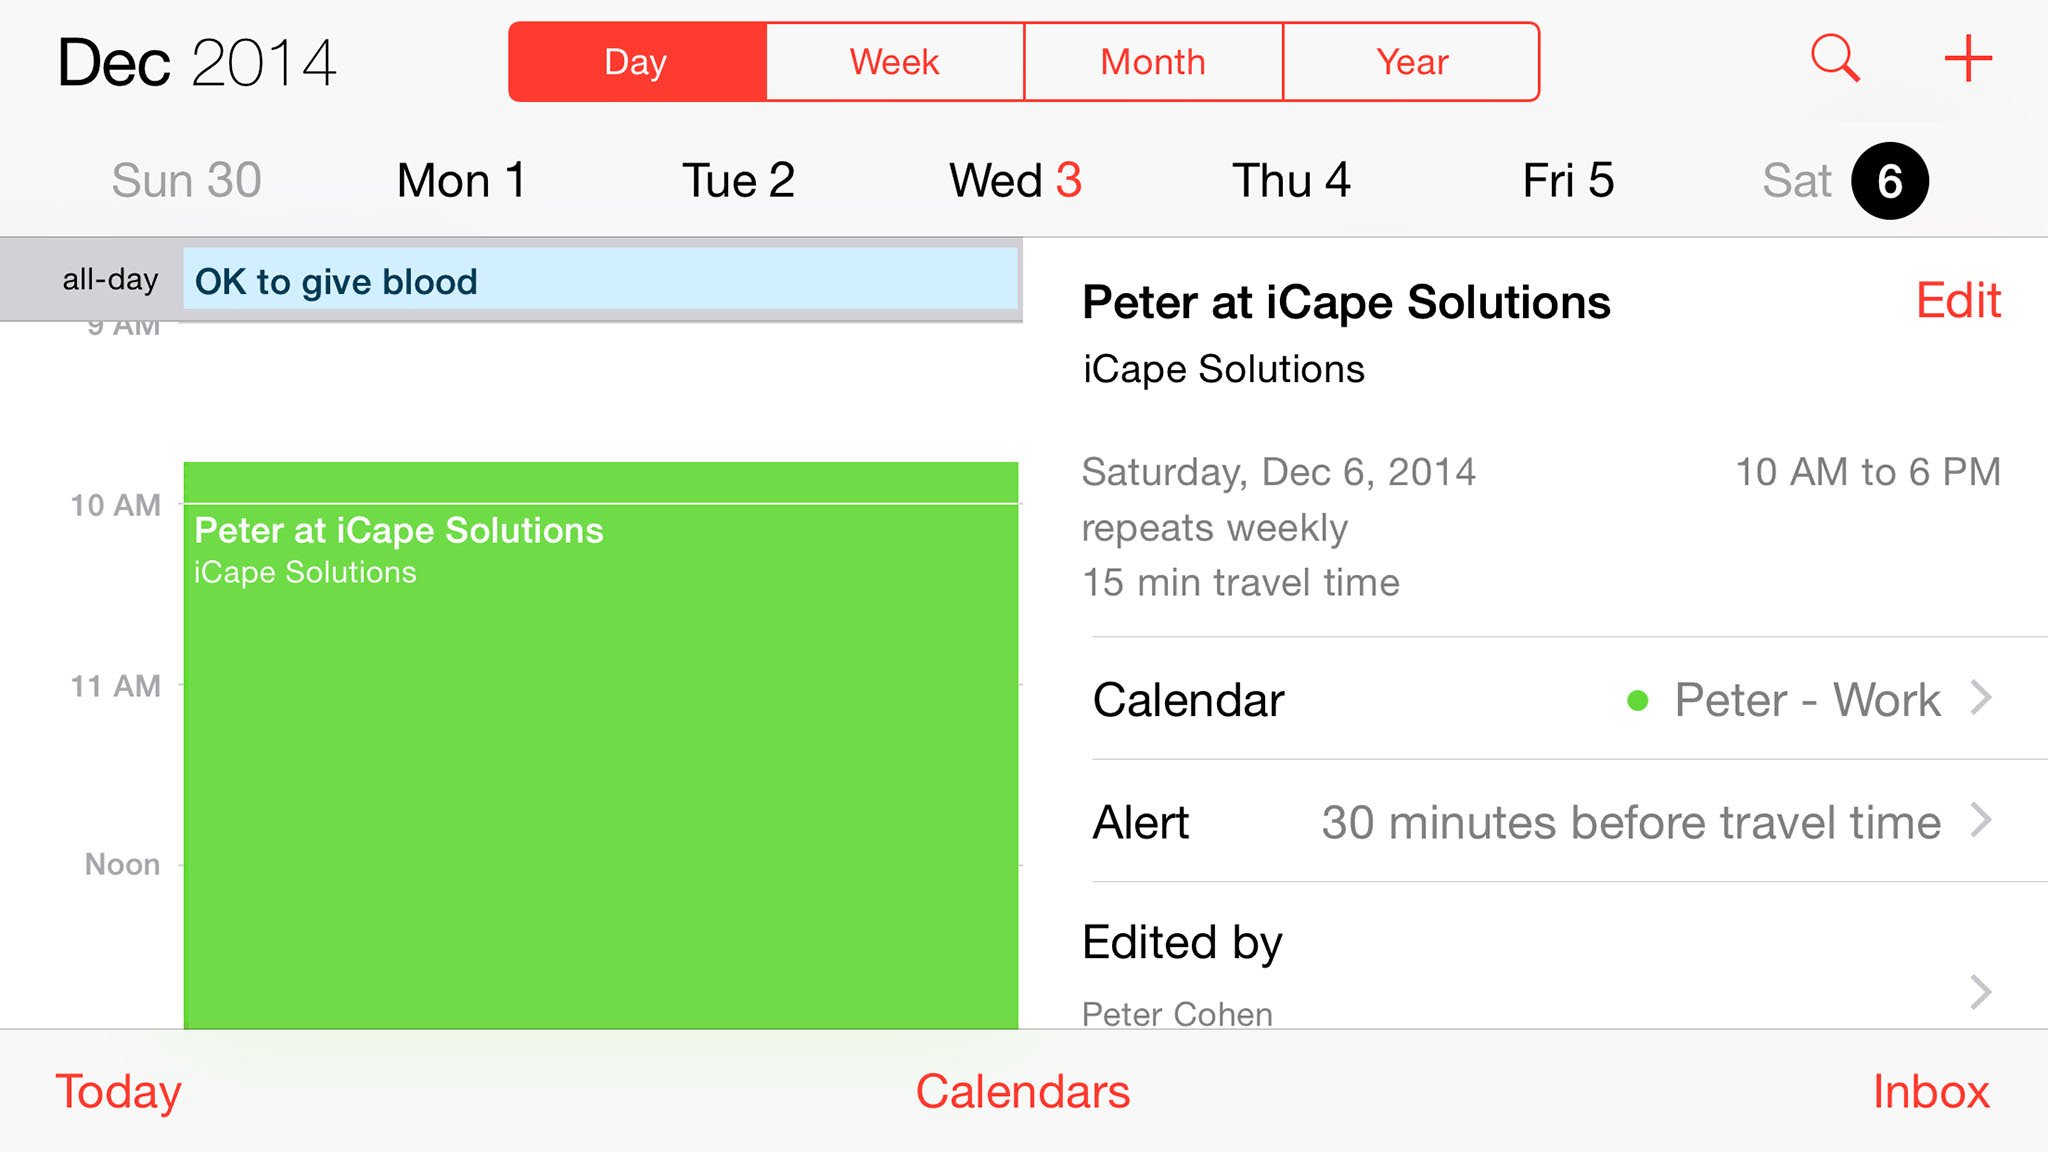 iPhone 6 Plus landscape orientation Calendar image